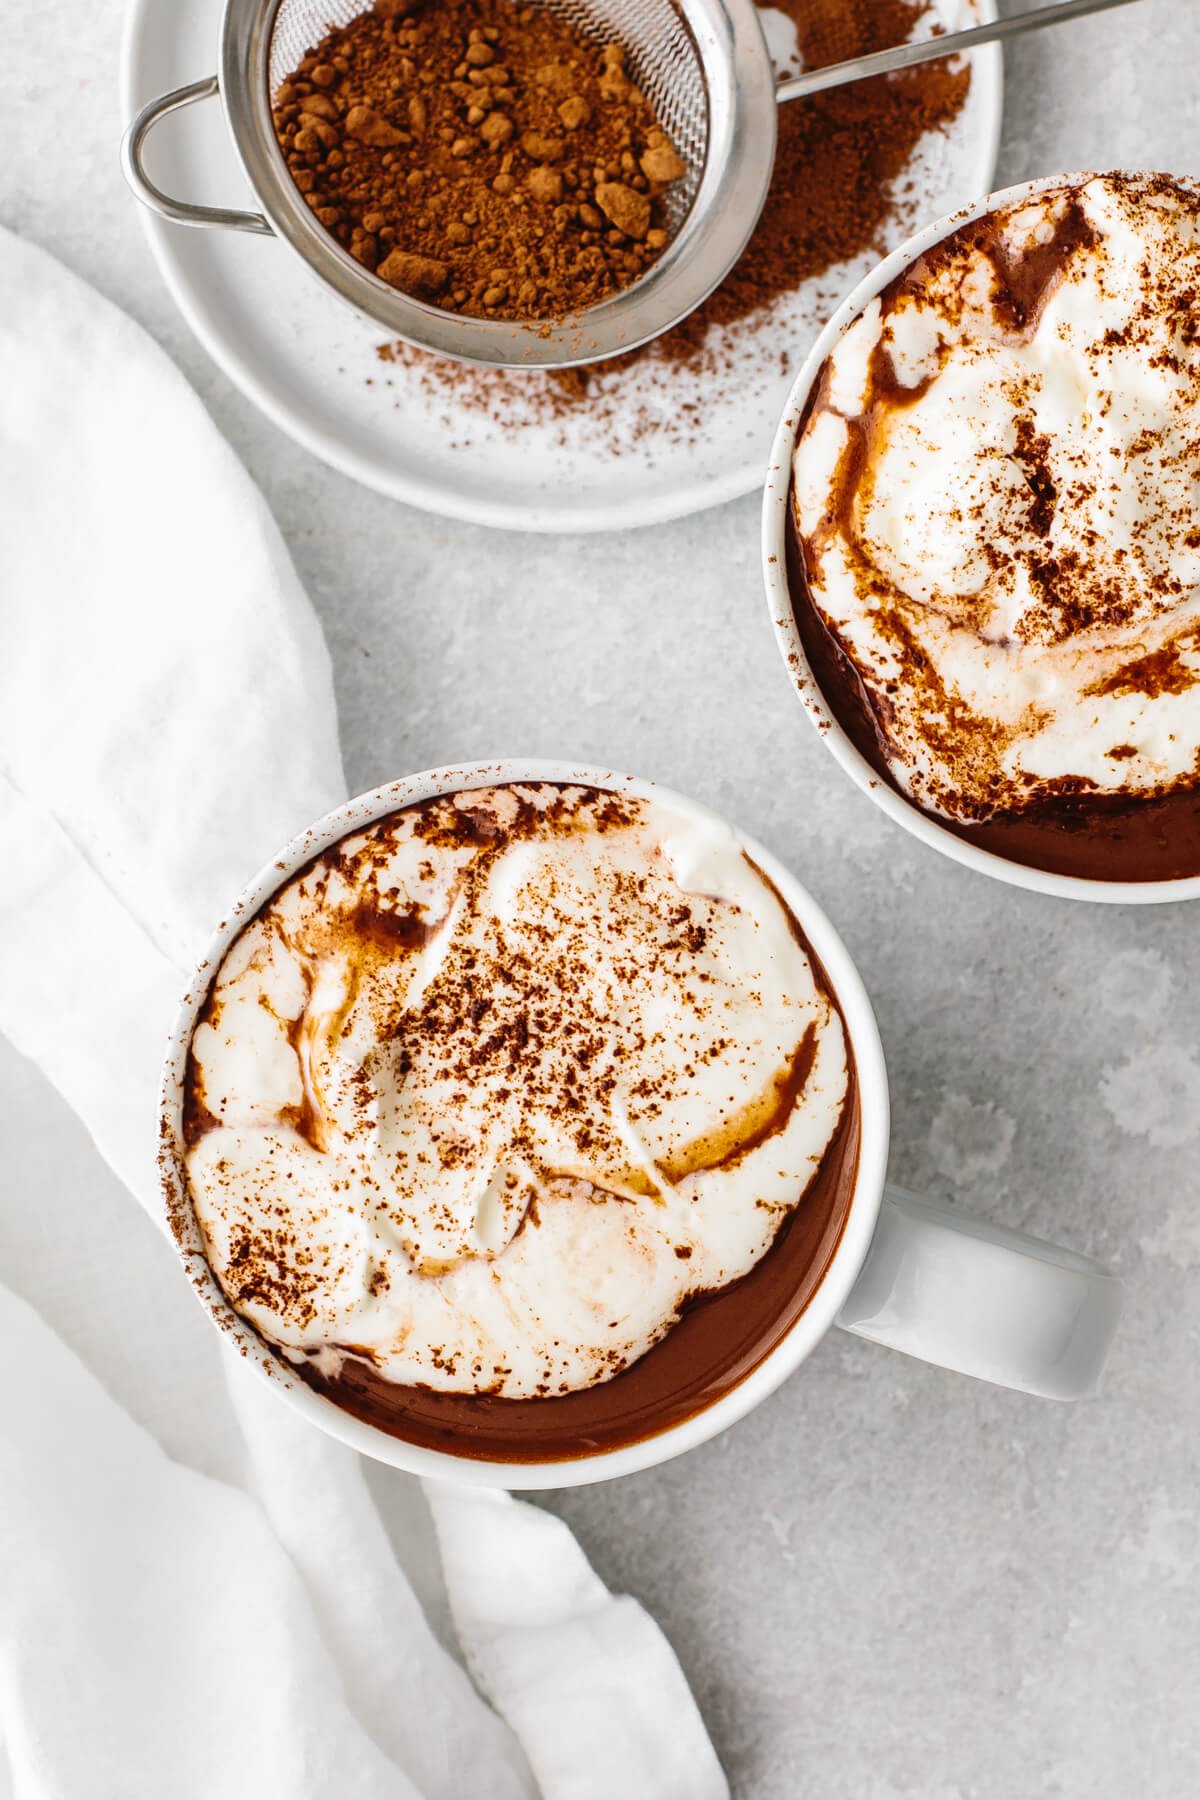 Mugs of hot chocolate with cream.